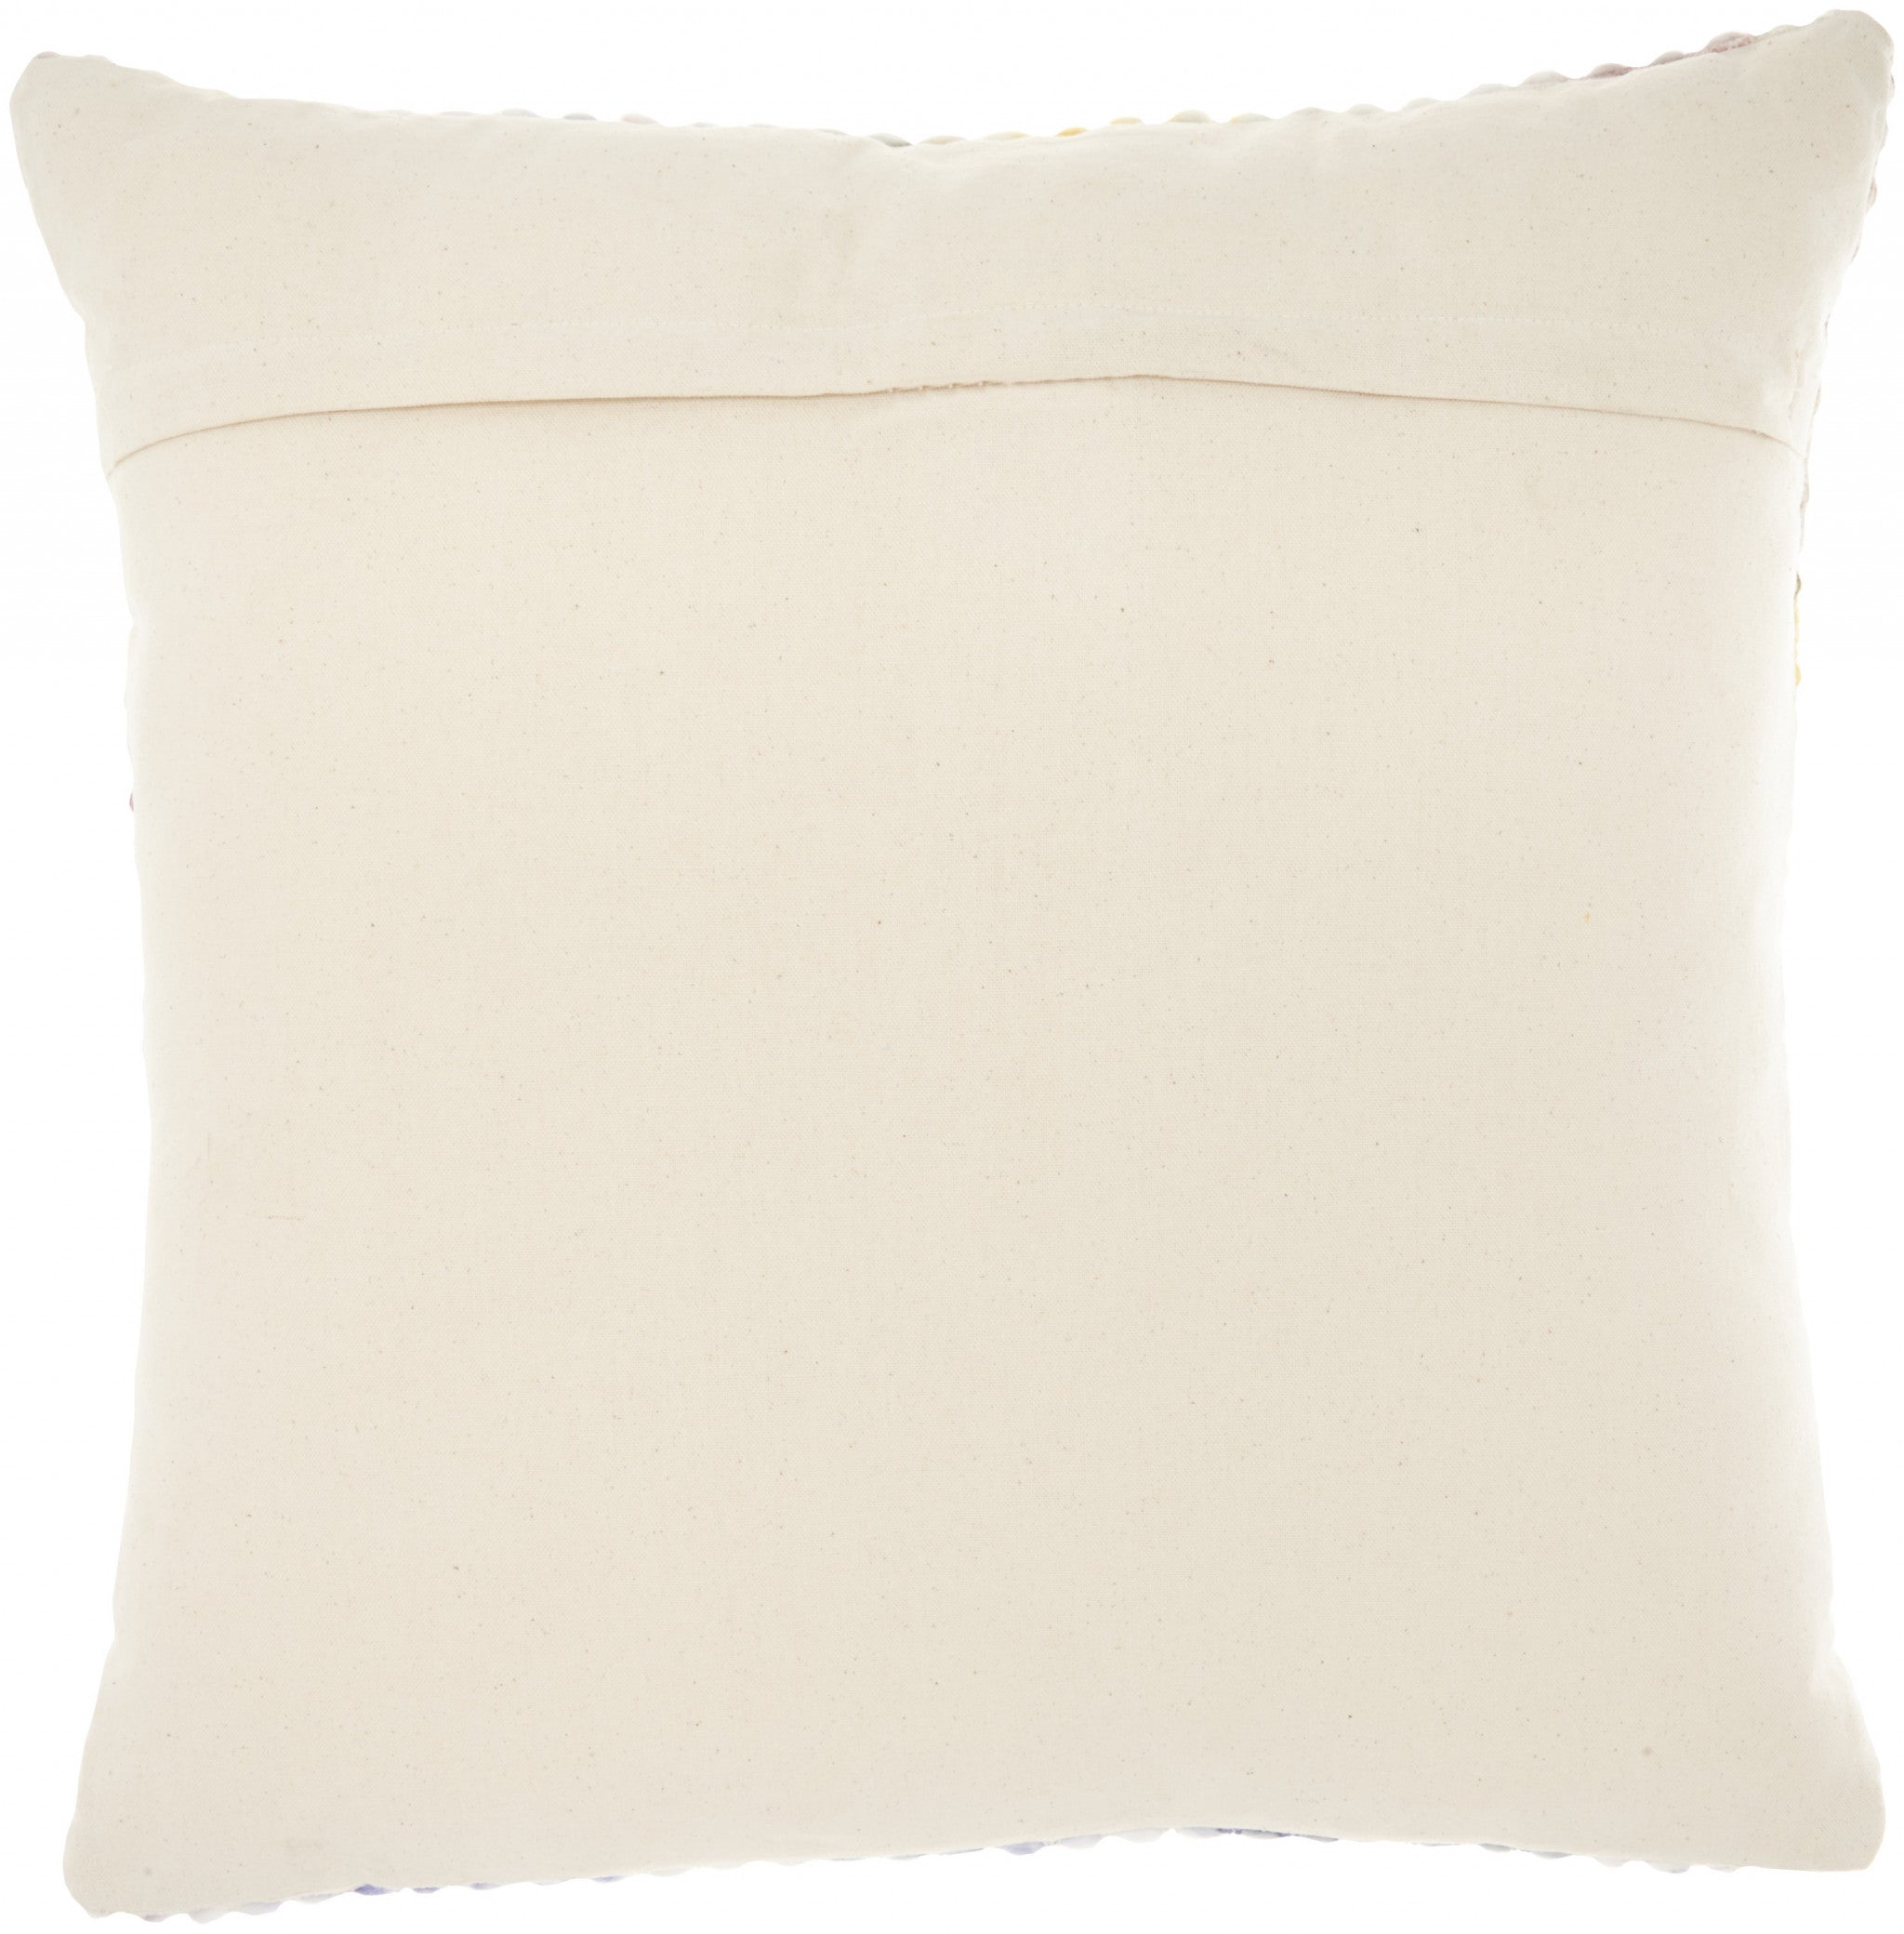 Multi Color Cotton Acryllic Accent Throw Pillow